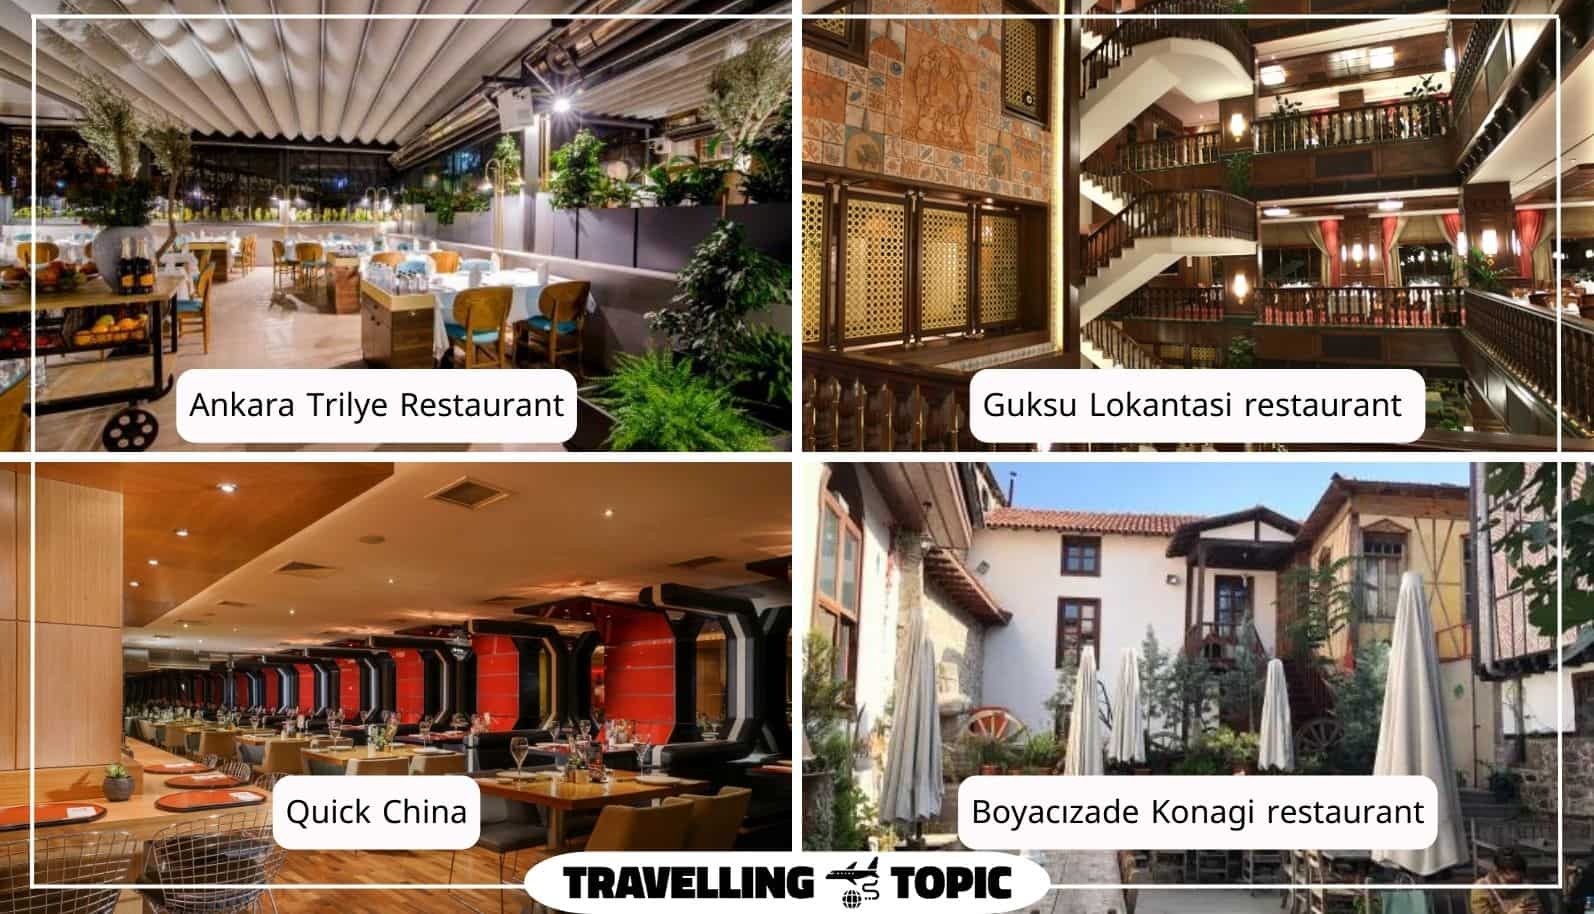 The best restaurants in the Turkish capital